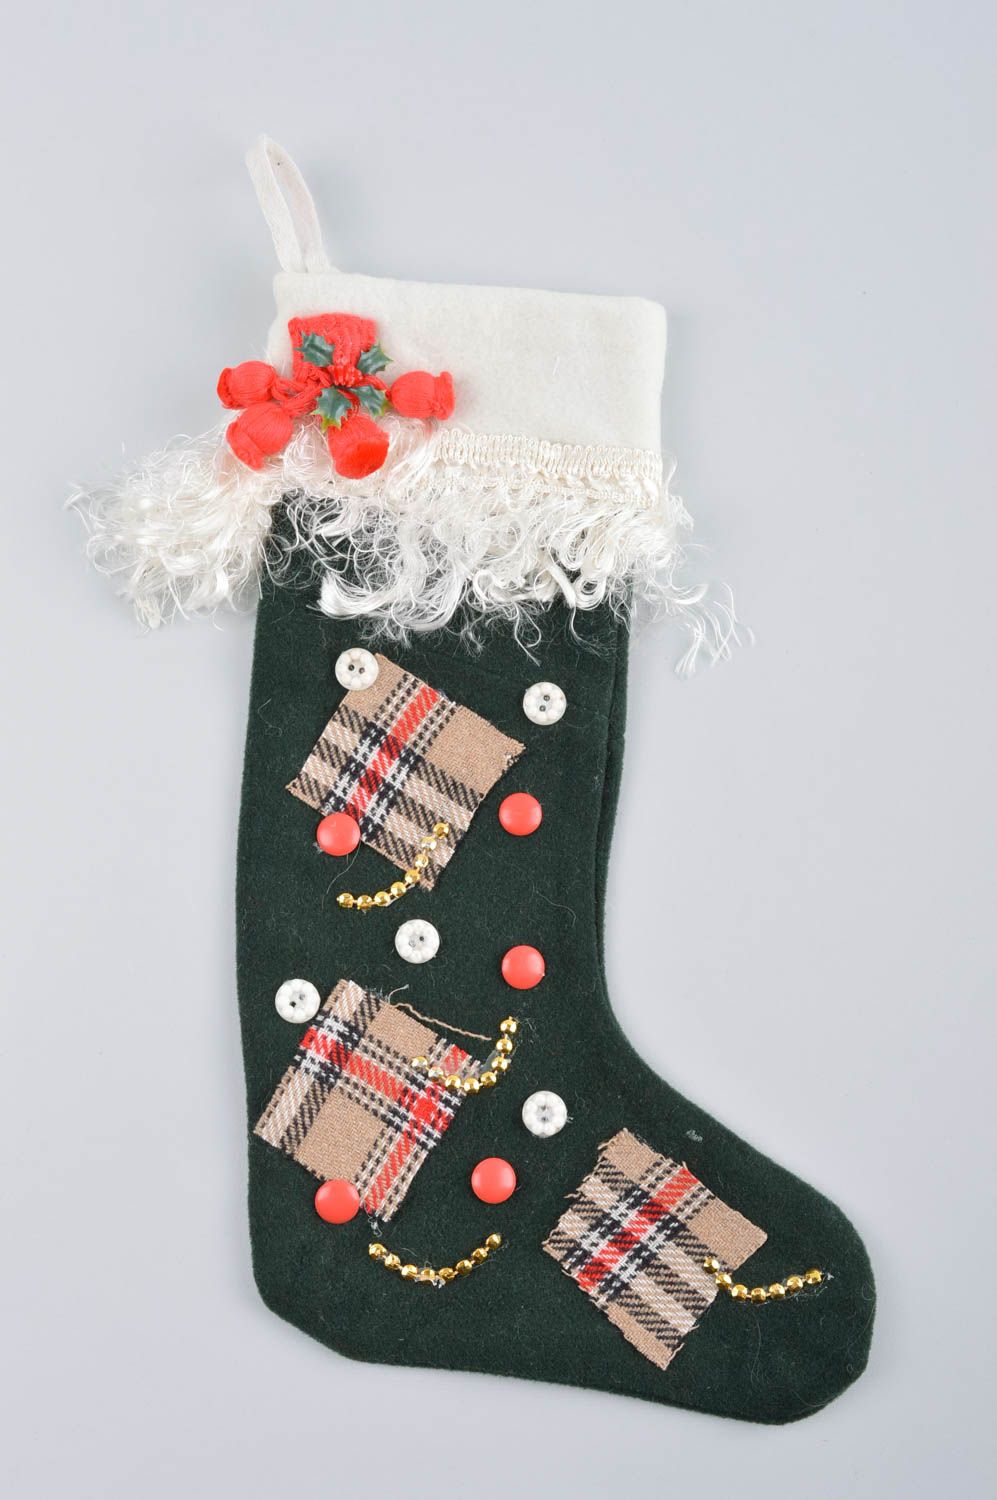 Handmade decorations Christmas stocking Xmas stockings souvenir ideas cool gifts photo 3